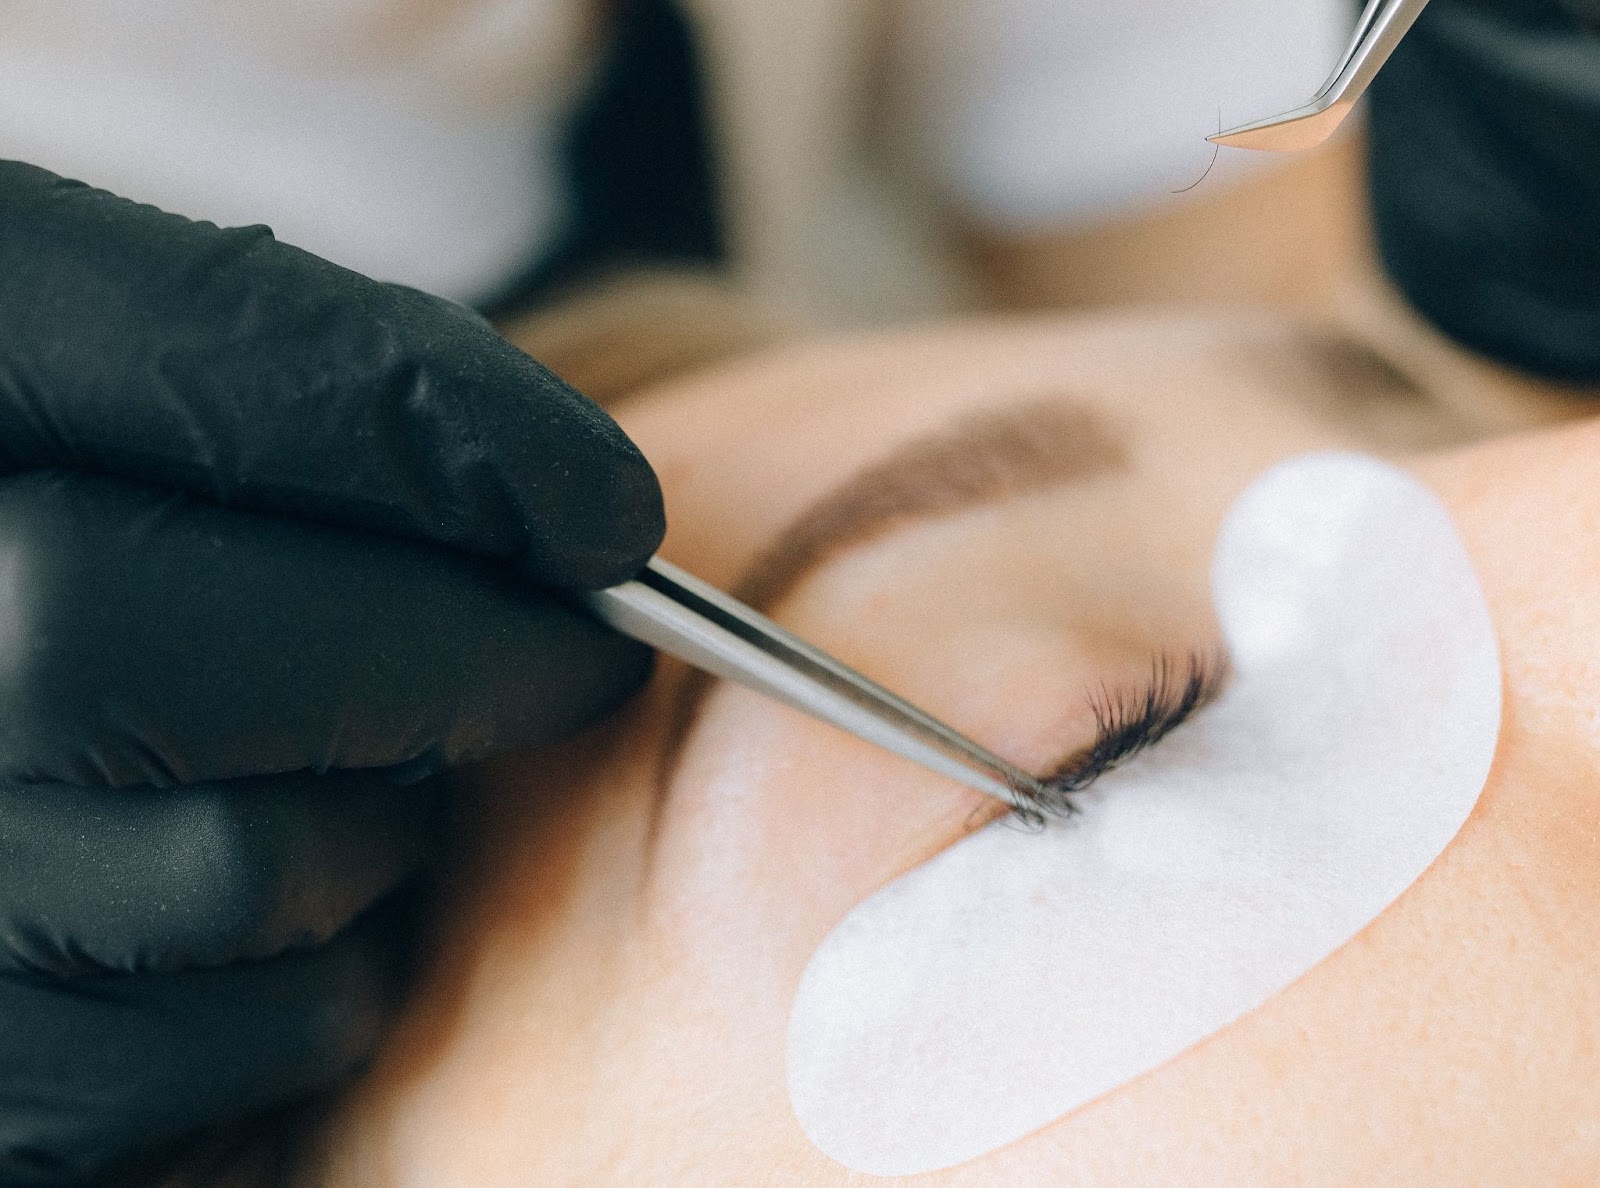 An eyelash technician carefully applies eyelashes to client's eye.